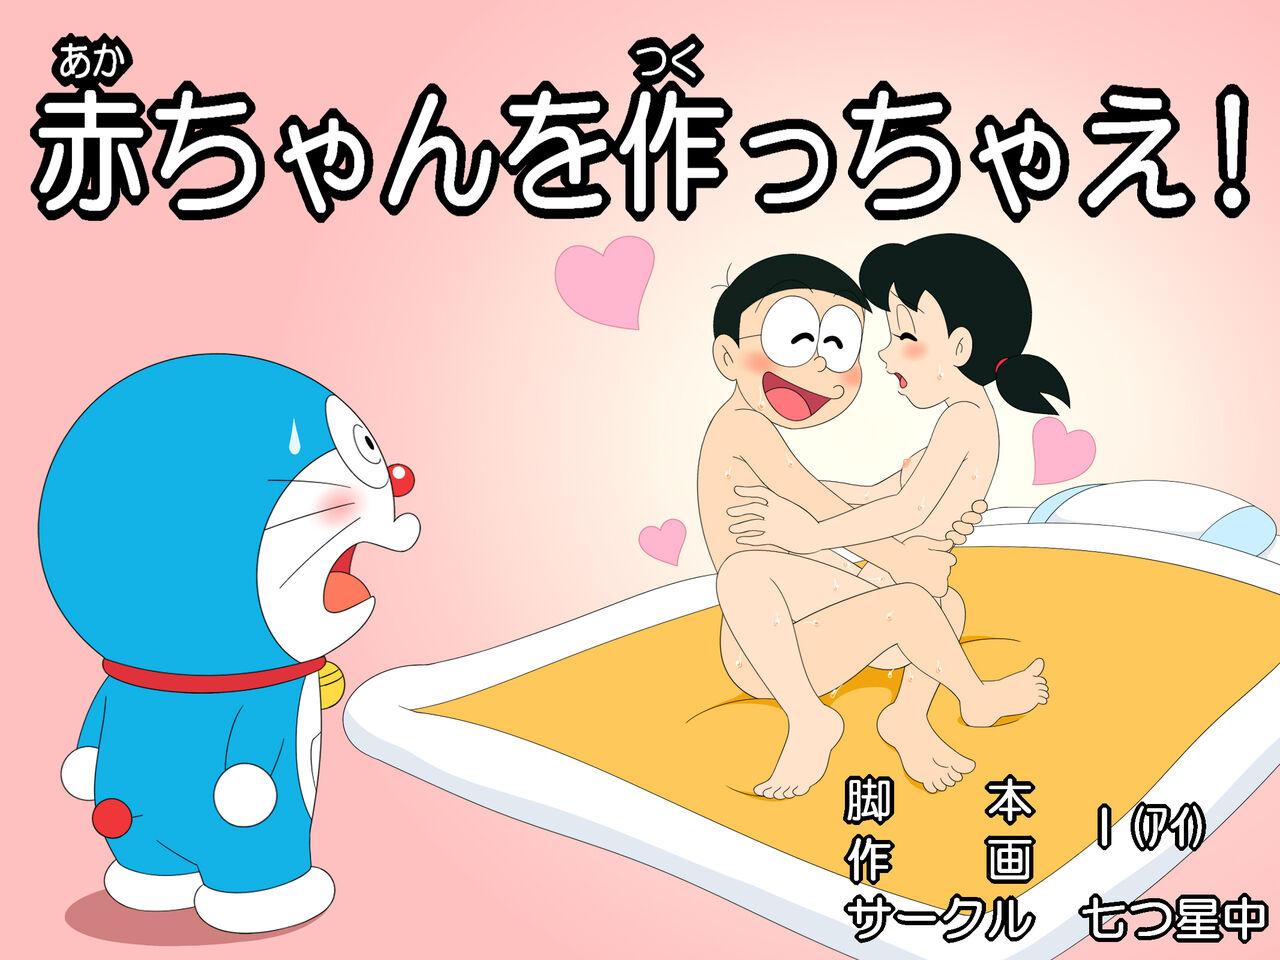 Teenxxx Joushiki Kaihen. Moshimo Gakusei Ninshin ga Joushiki na Seikai dattara - Doraemon Foot - Picture 2